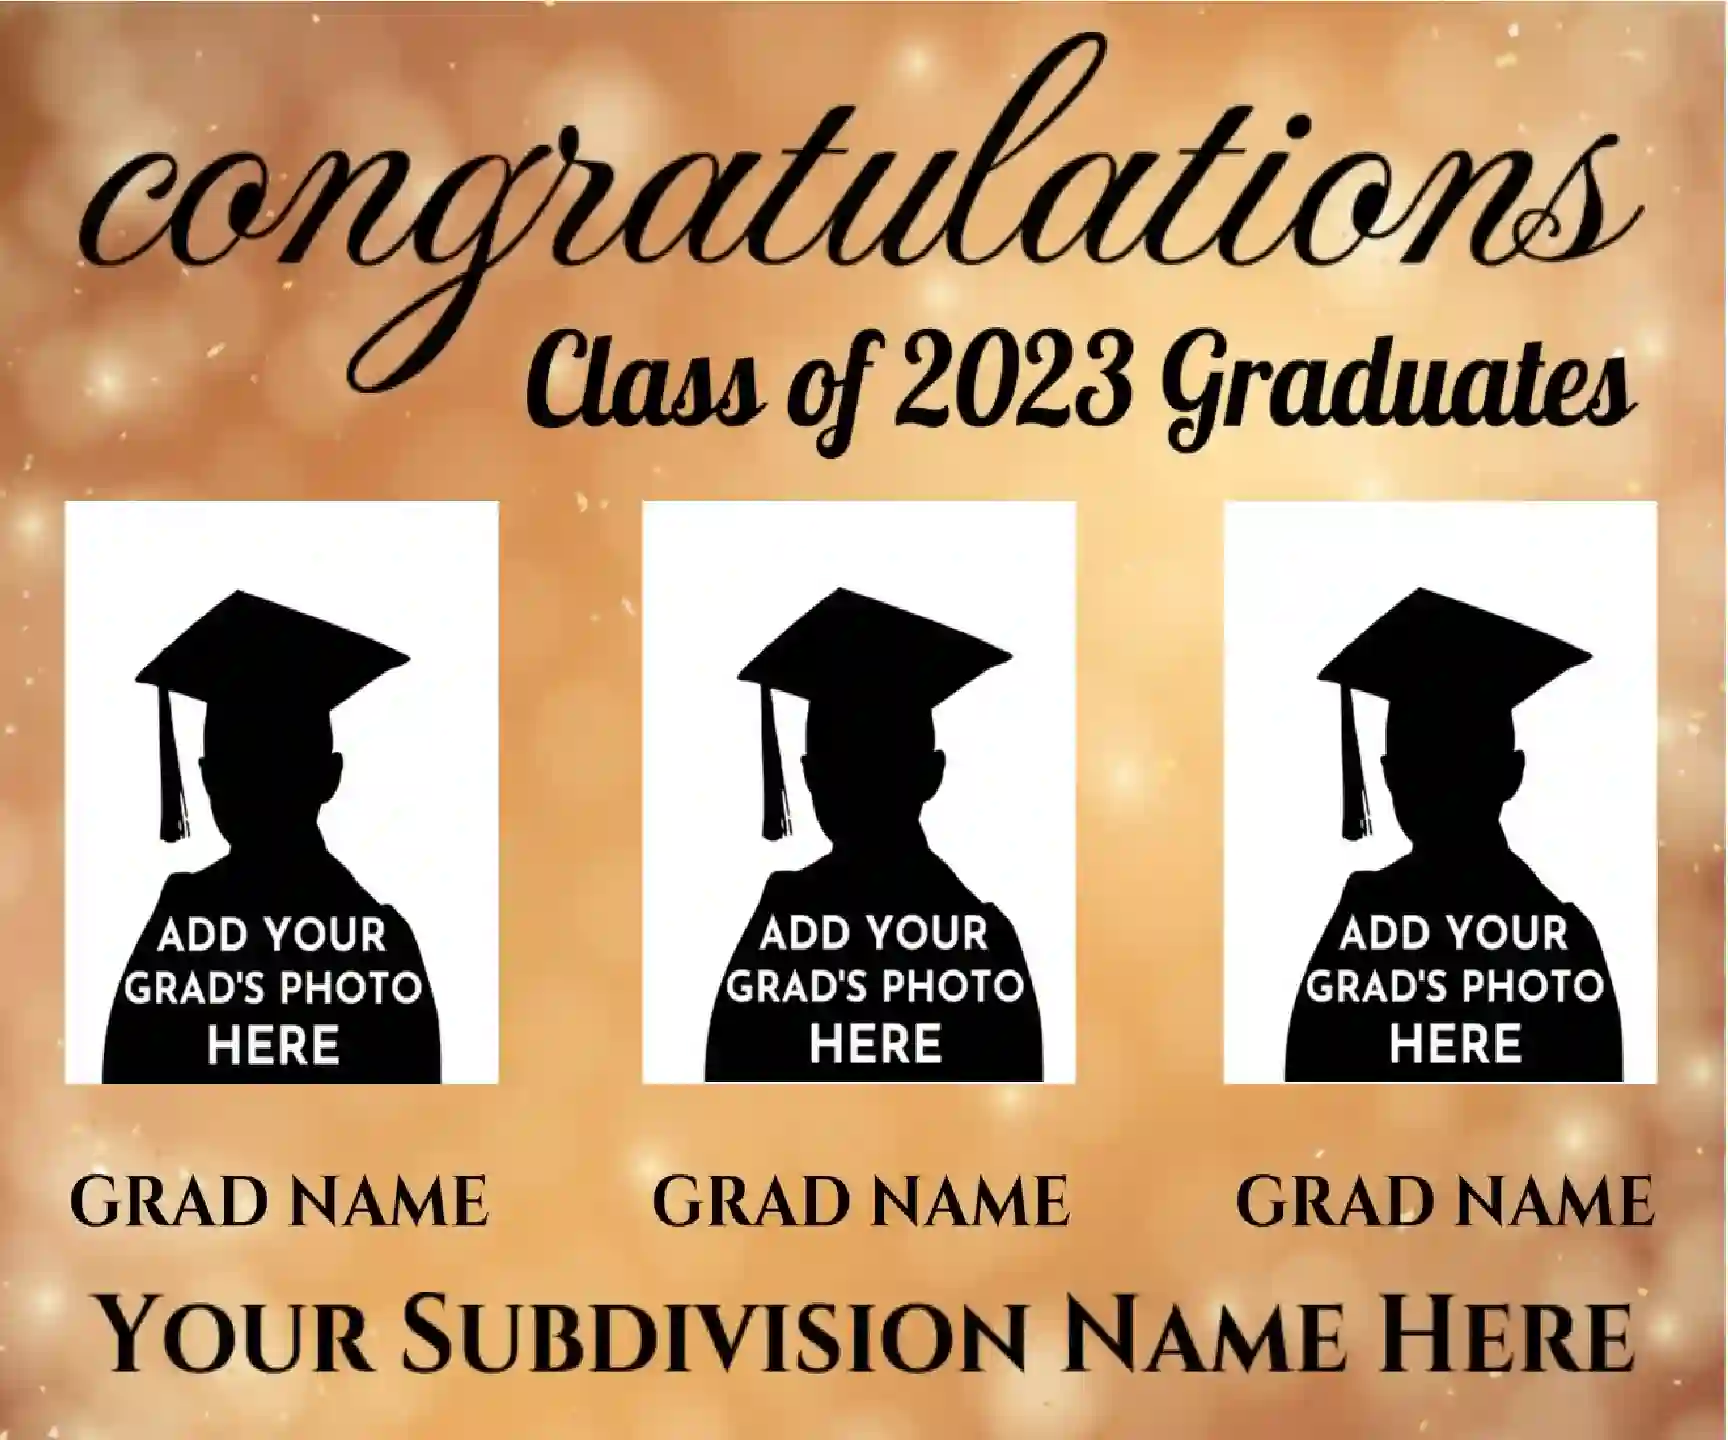 Subdivision Graduation banners